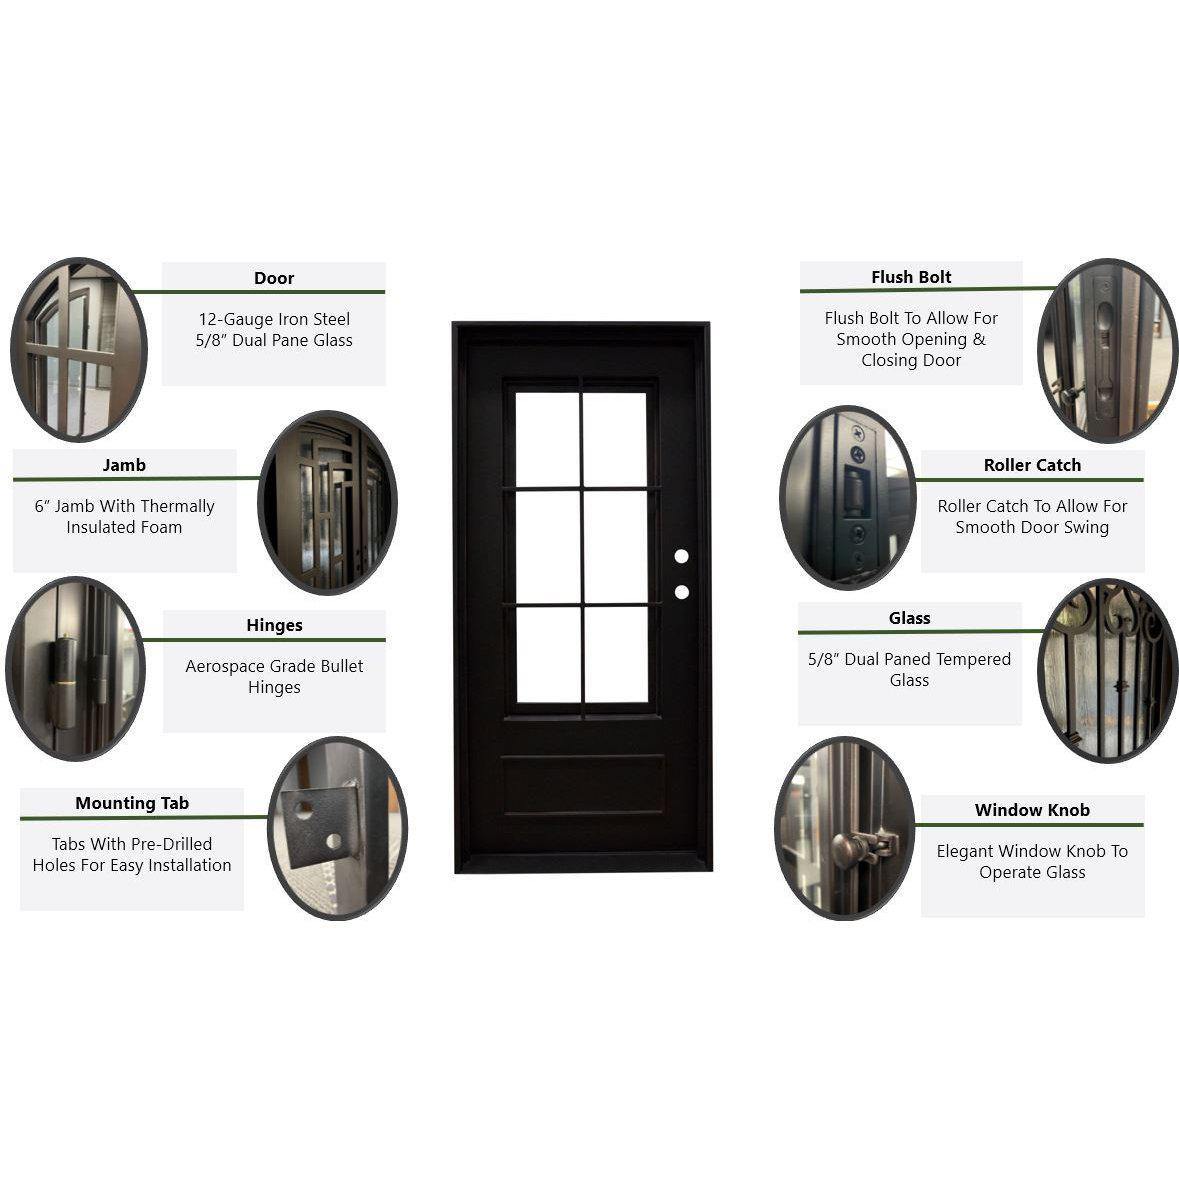 Pre-Order Courchevel-Wrought Iron Doors-Black Diamond Iron Doors